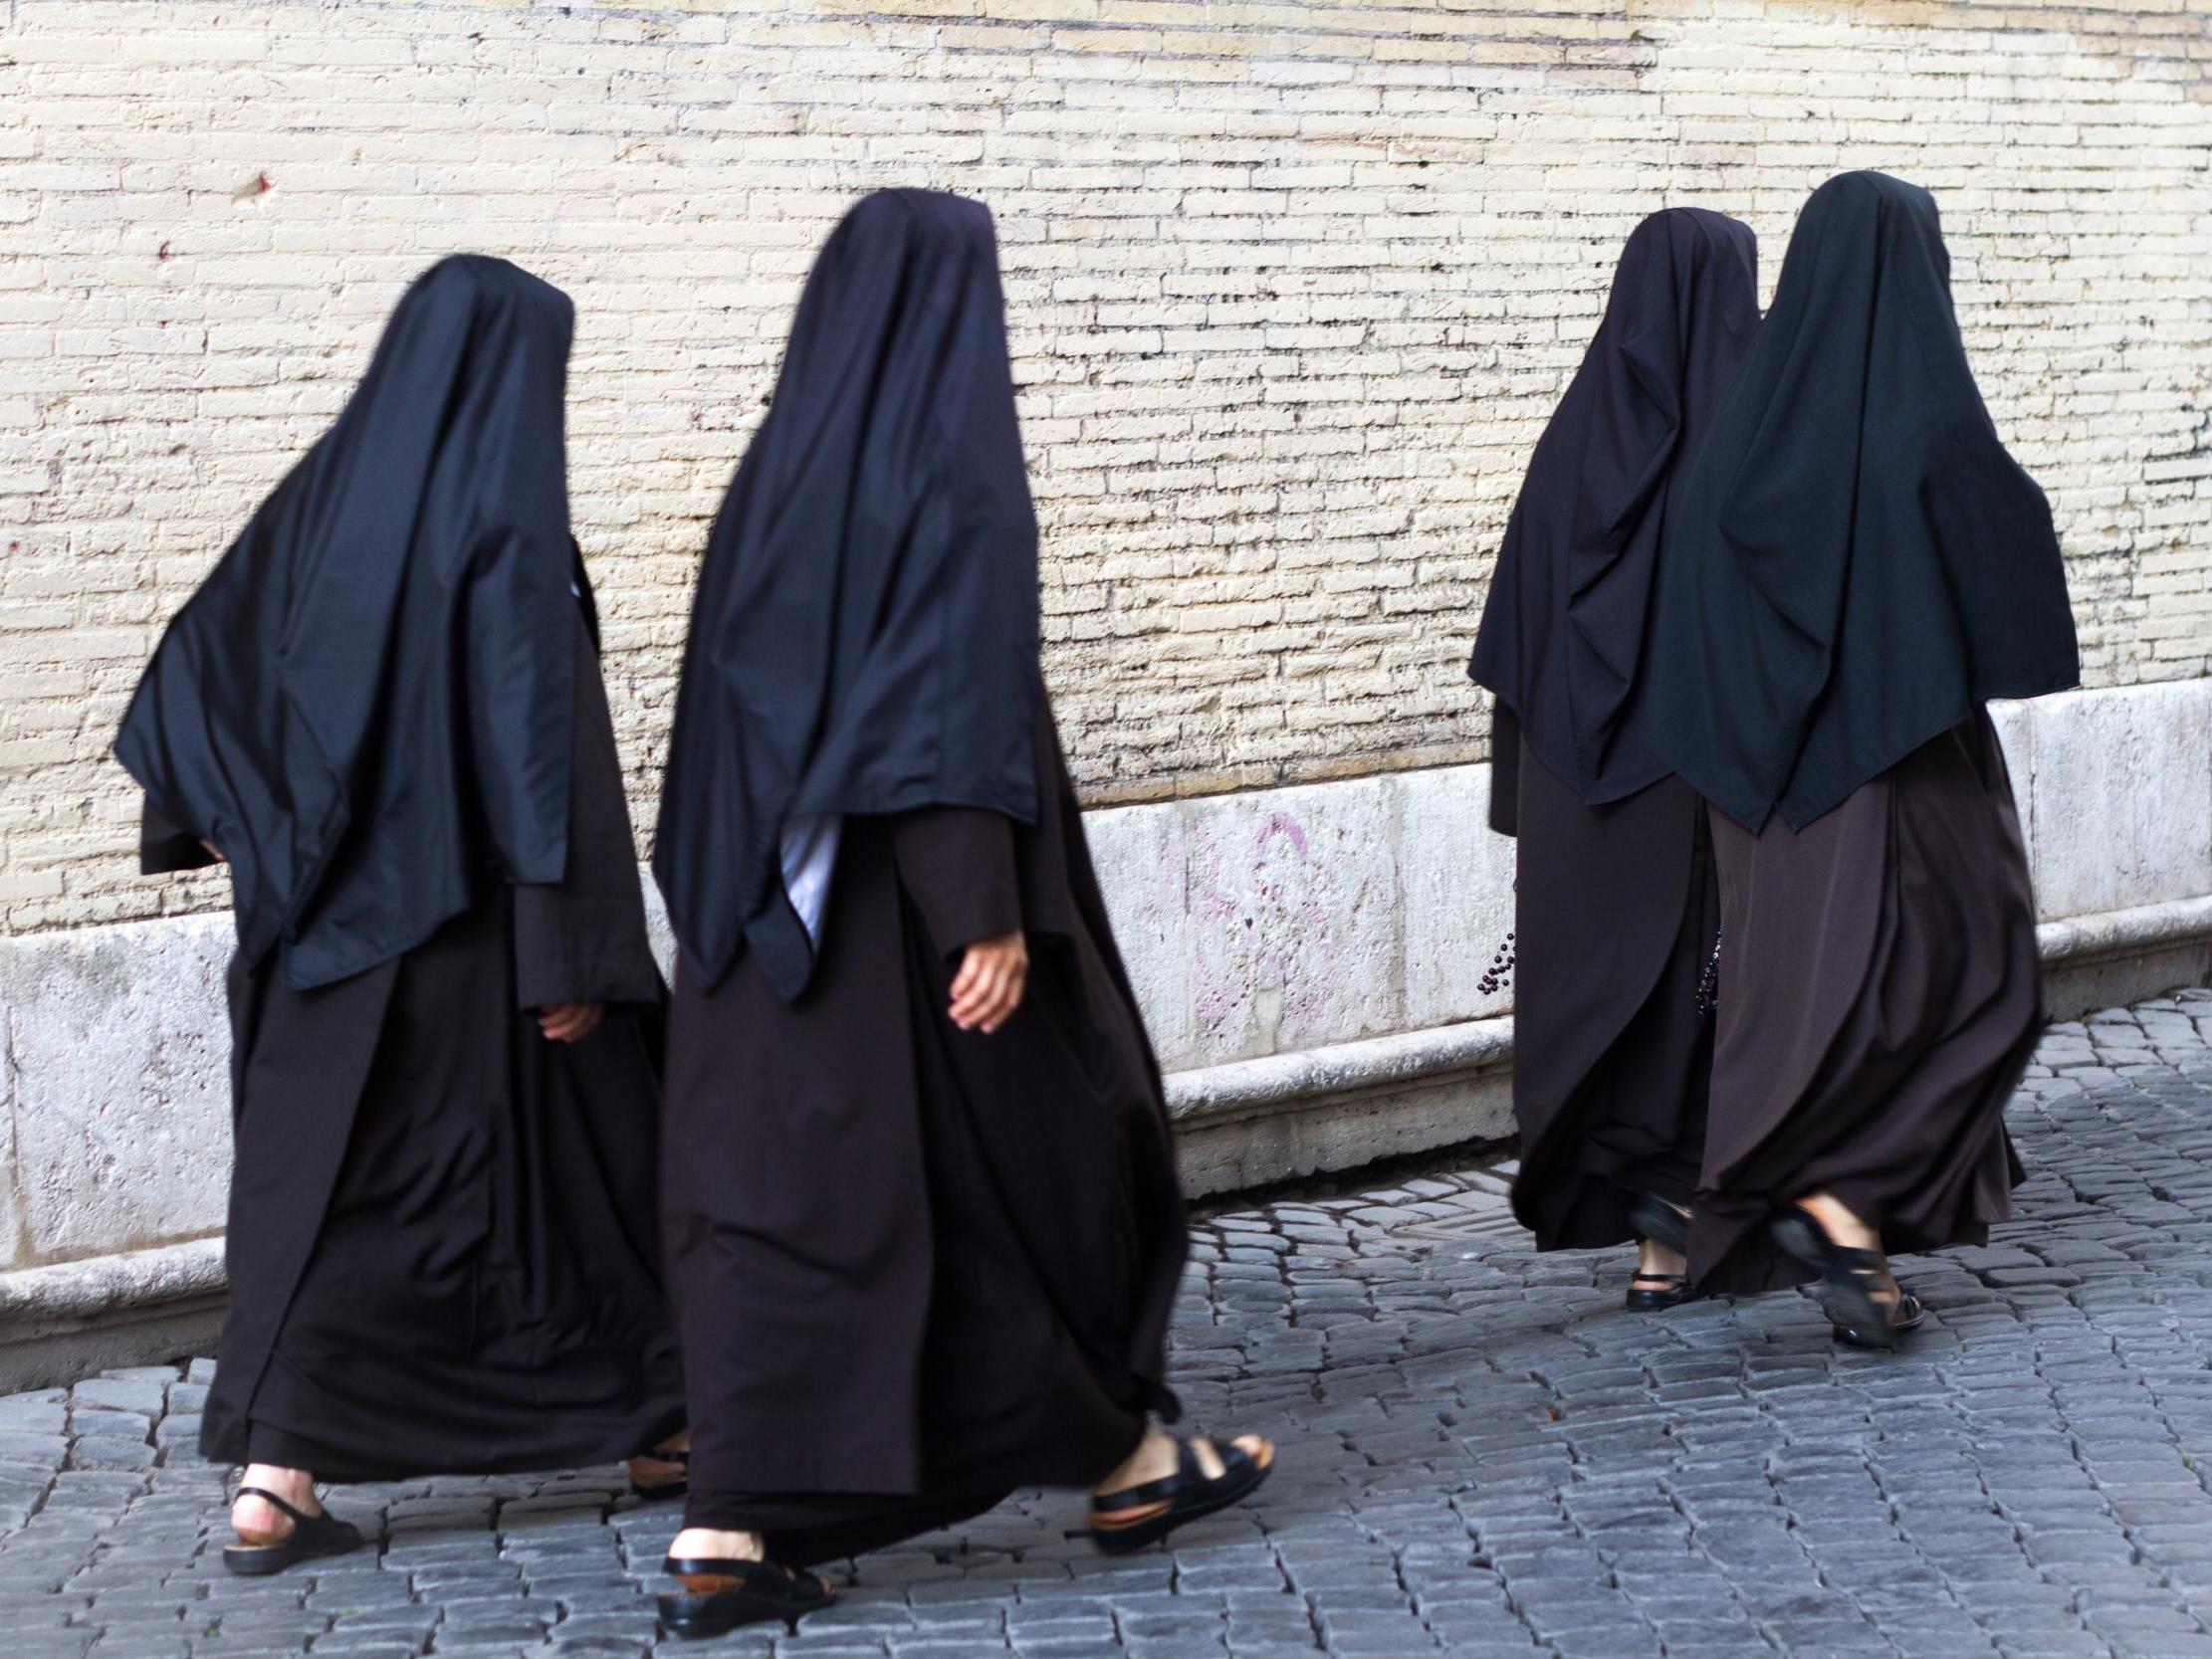 Pregnant Nun Sex - Catholic Church investigating two nuns who returned pregnant ...